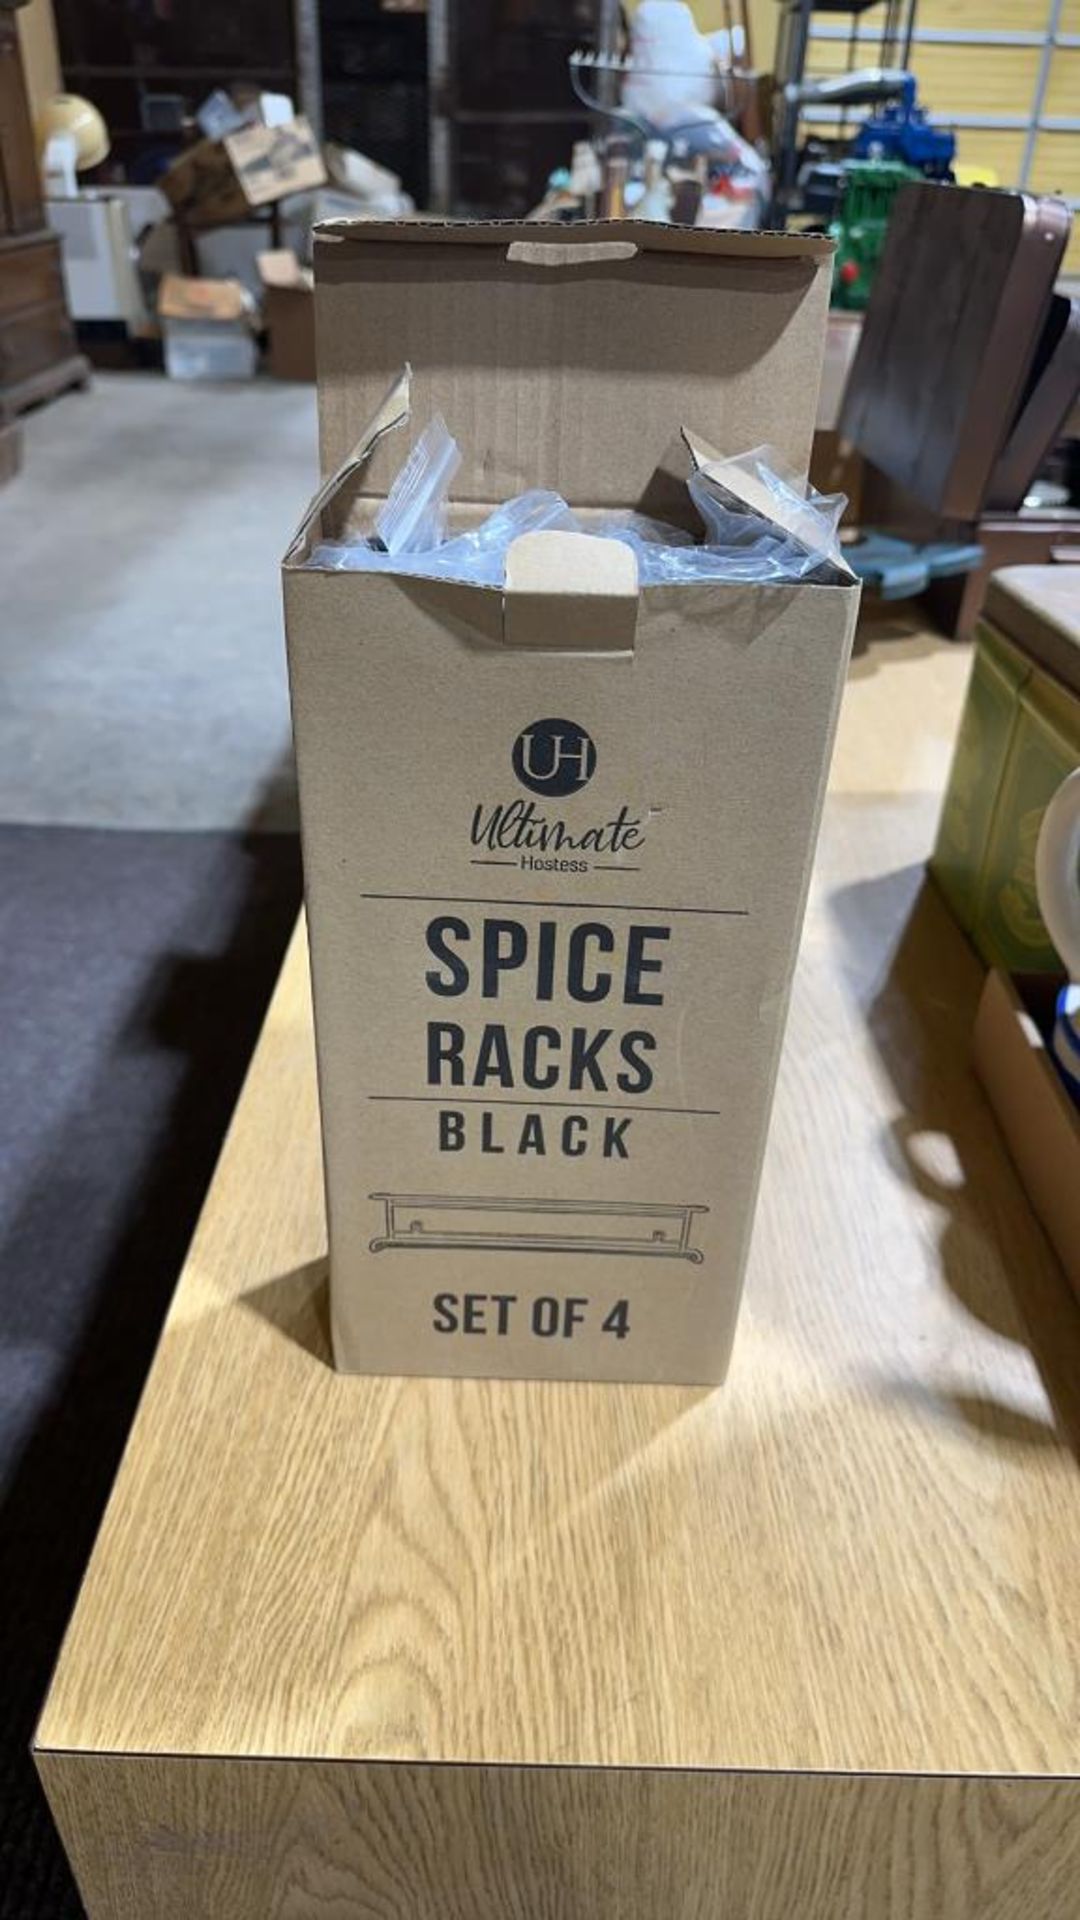 New set of 4 black spice racks